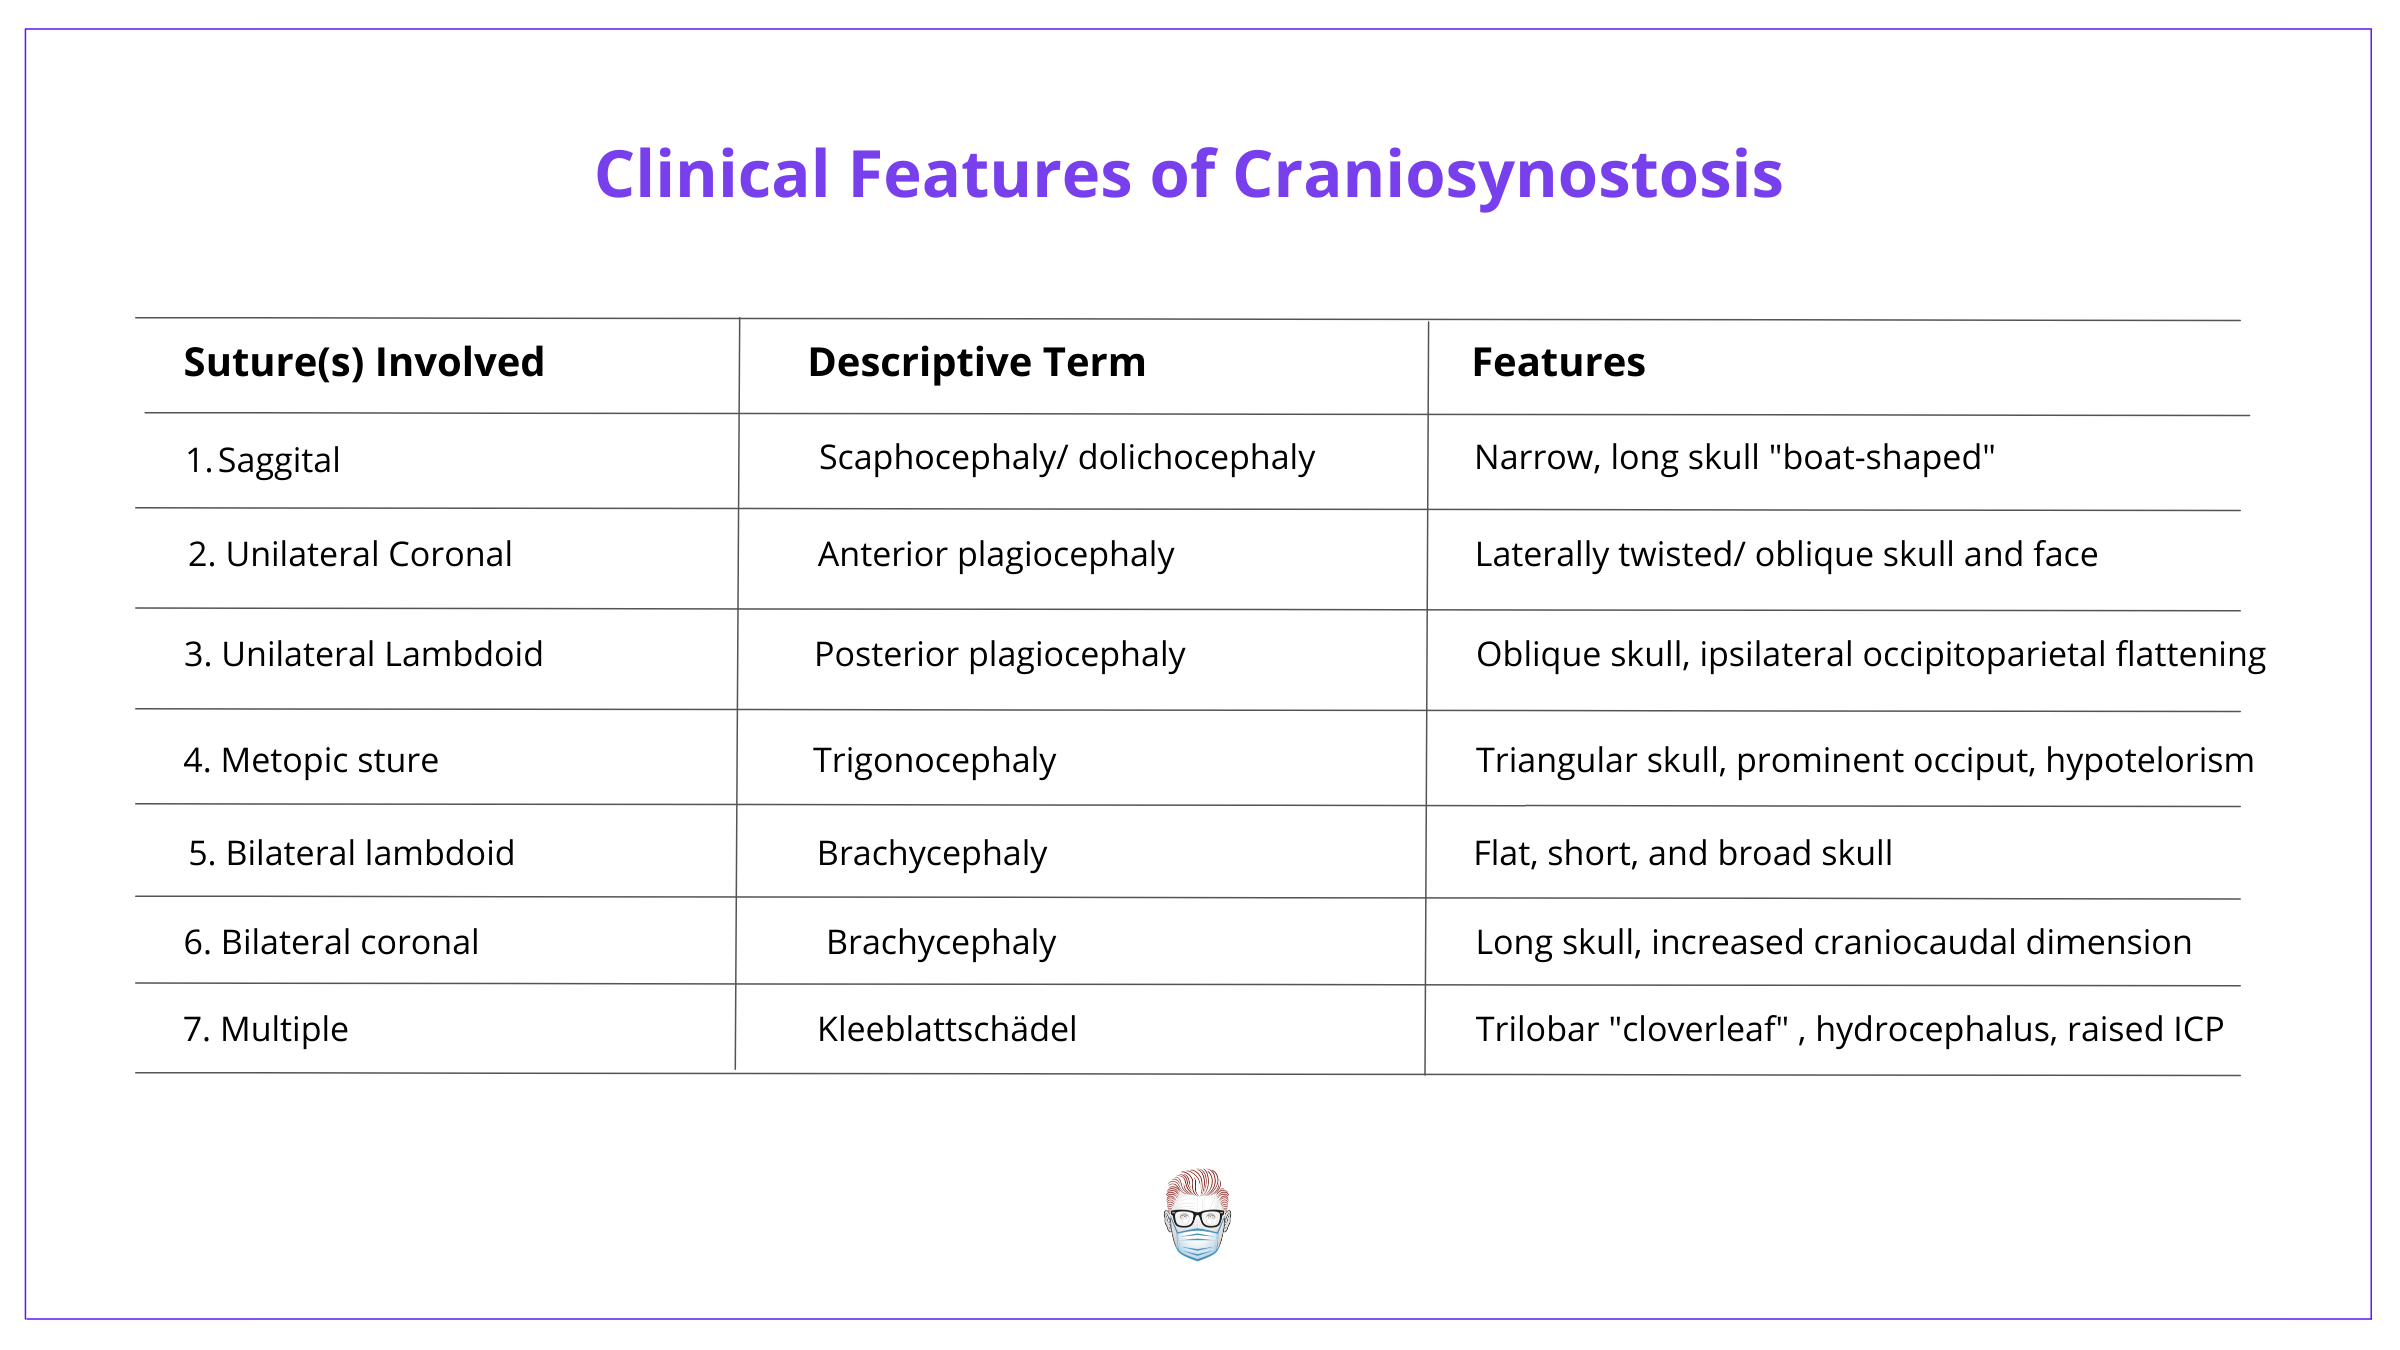 Clinical Features of Craniosynostosis, Scaphocephaly, Plagiocephaly, Trigonocephaly, Bracycephaly